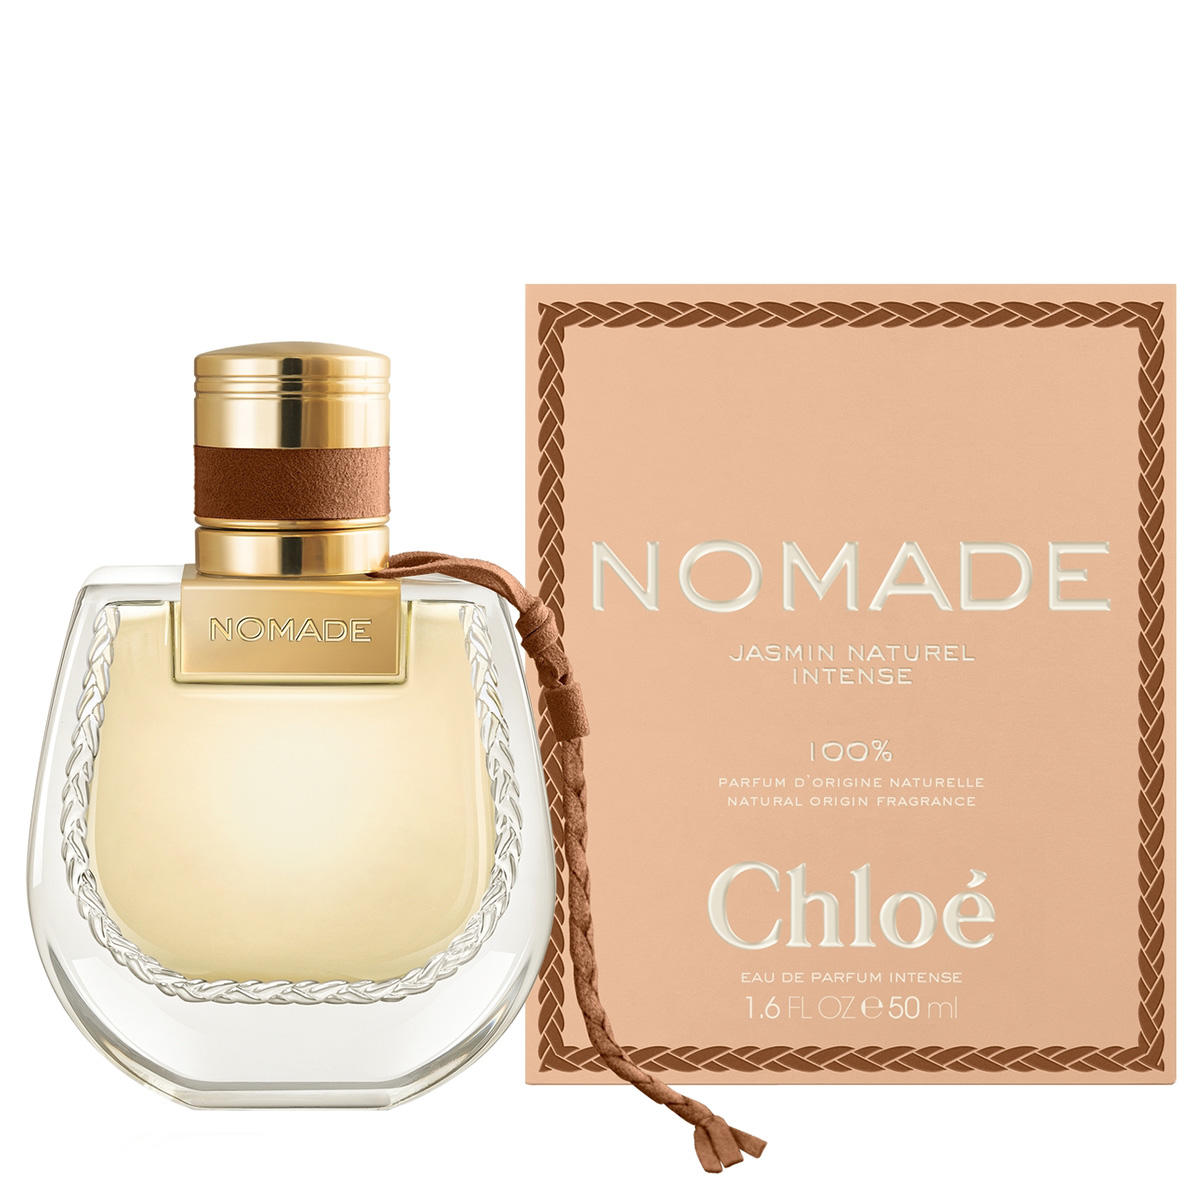 Chloé Nomade Jasmin Naturel Intense Eau de Parfum 50 ml - 2